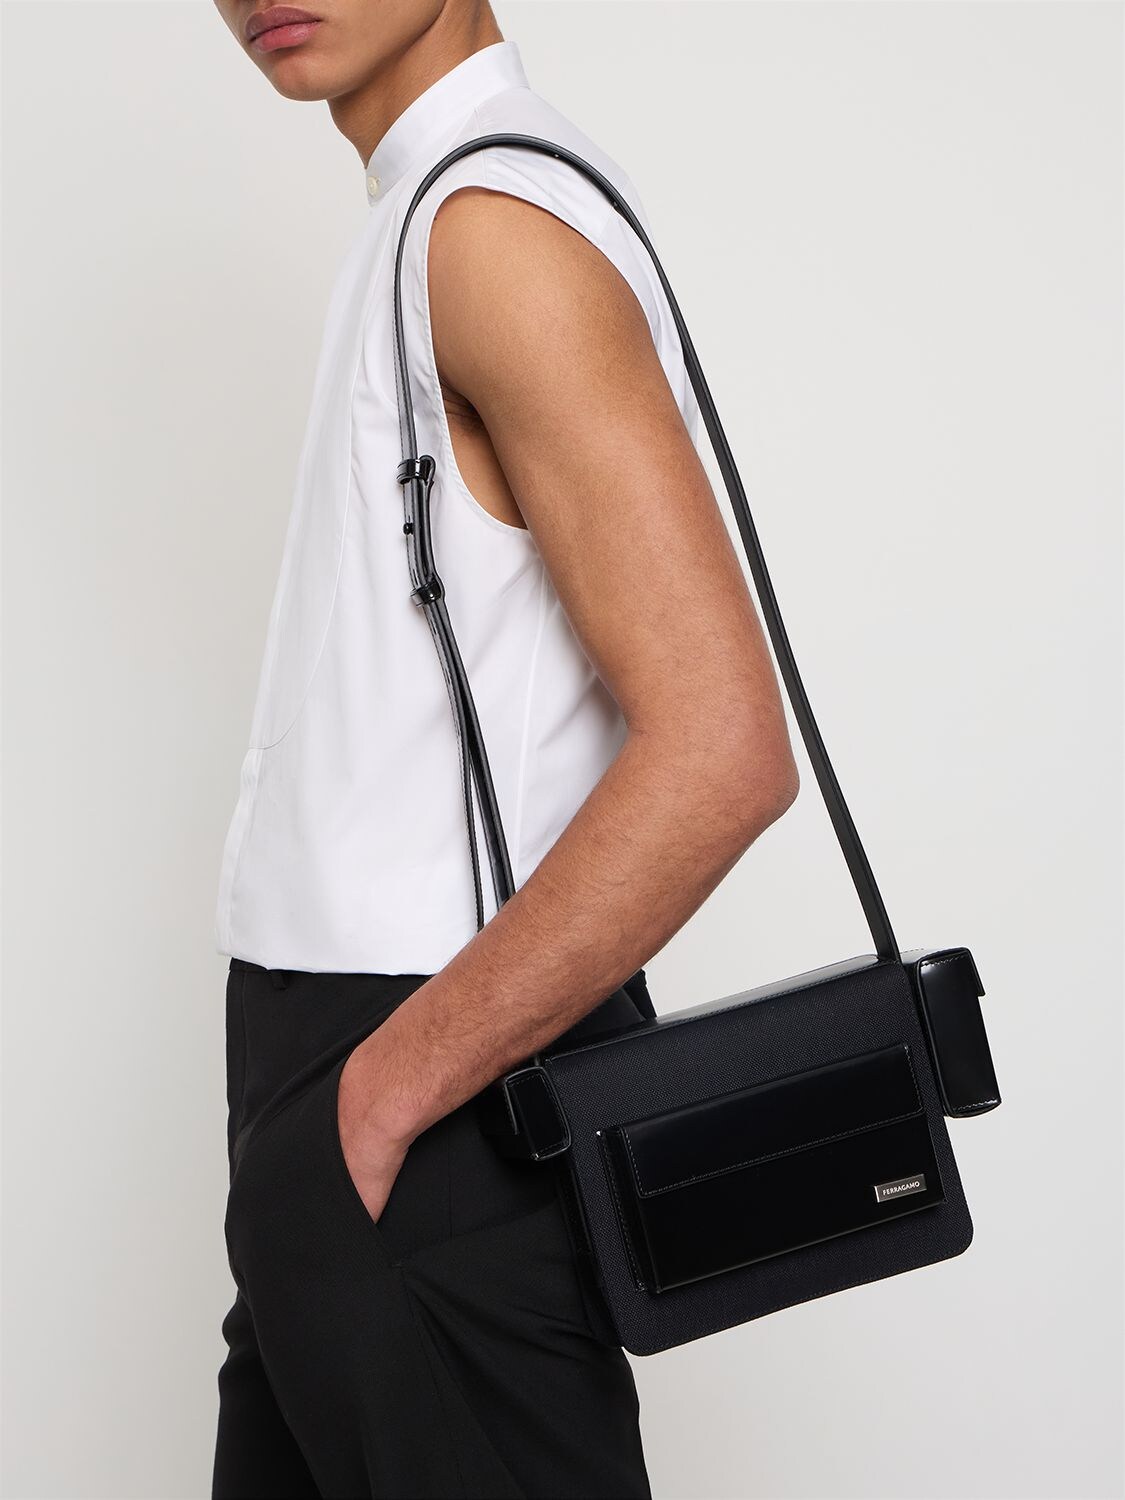 Ferragamo Men's Leather Gancio Studio Messenger Bag